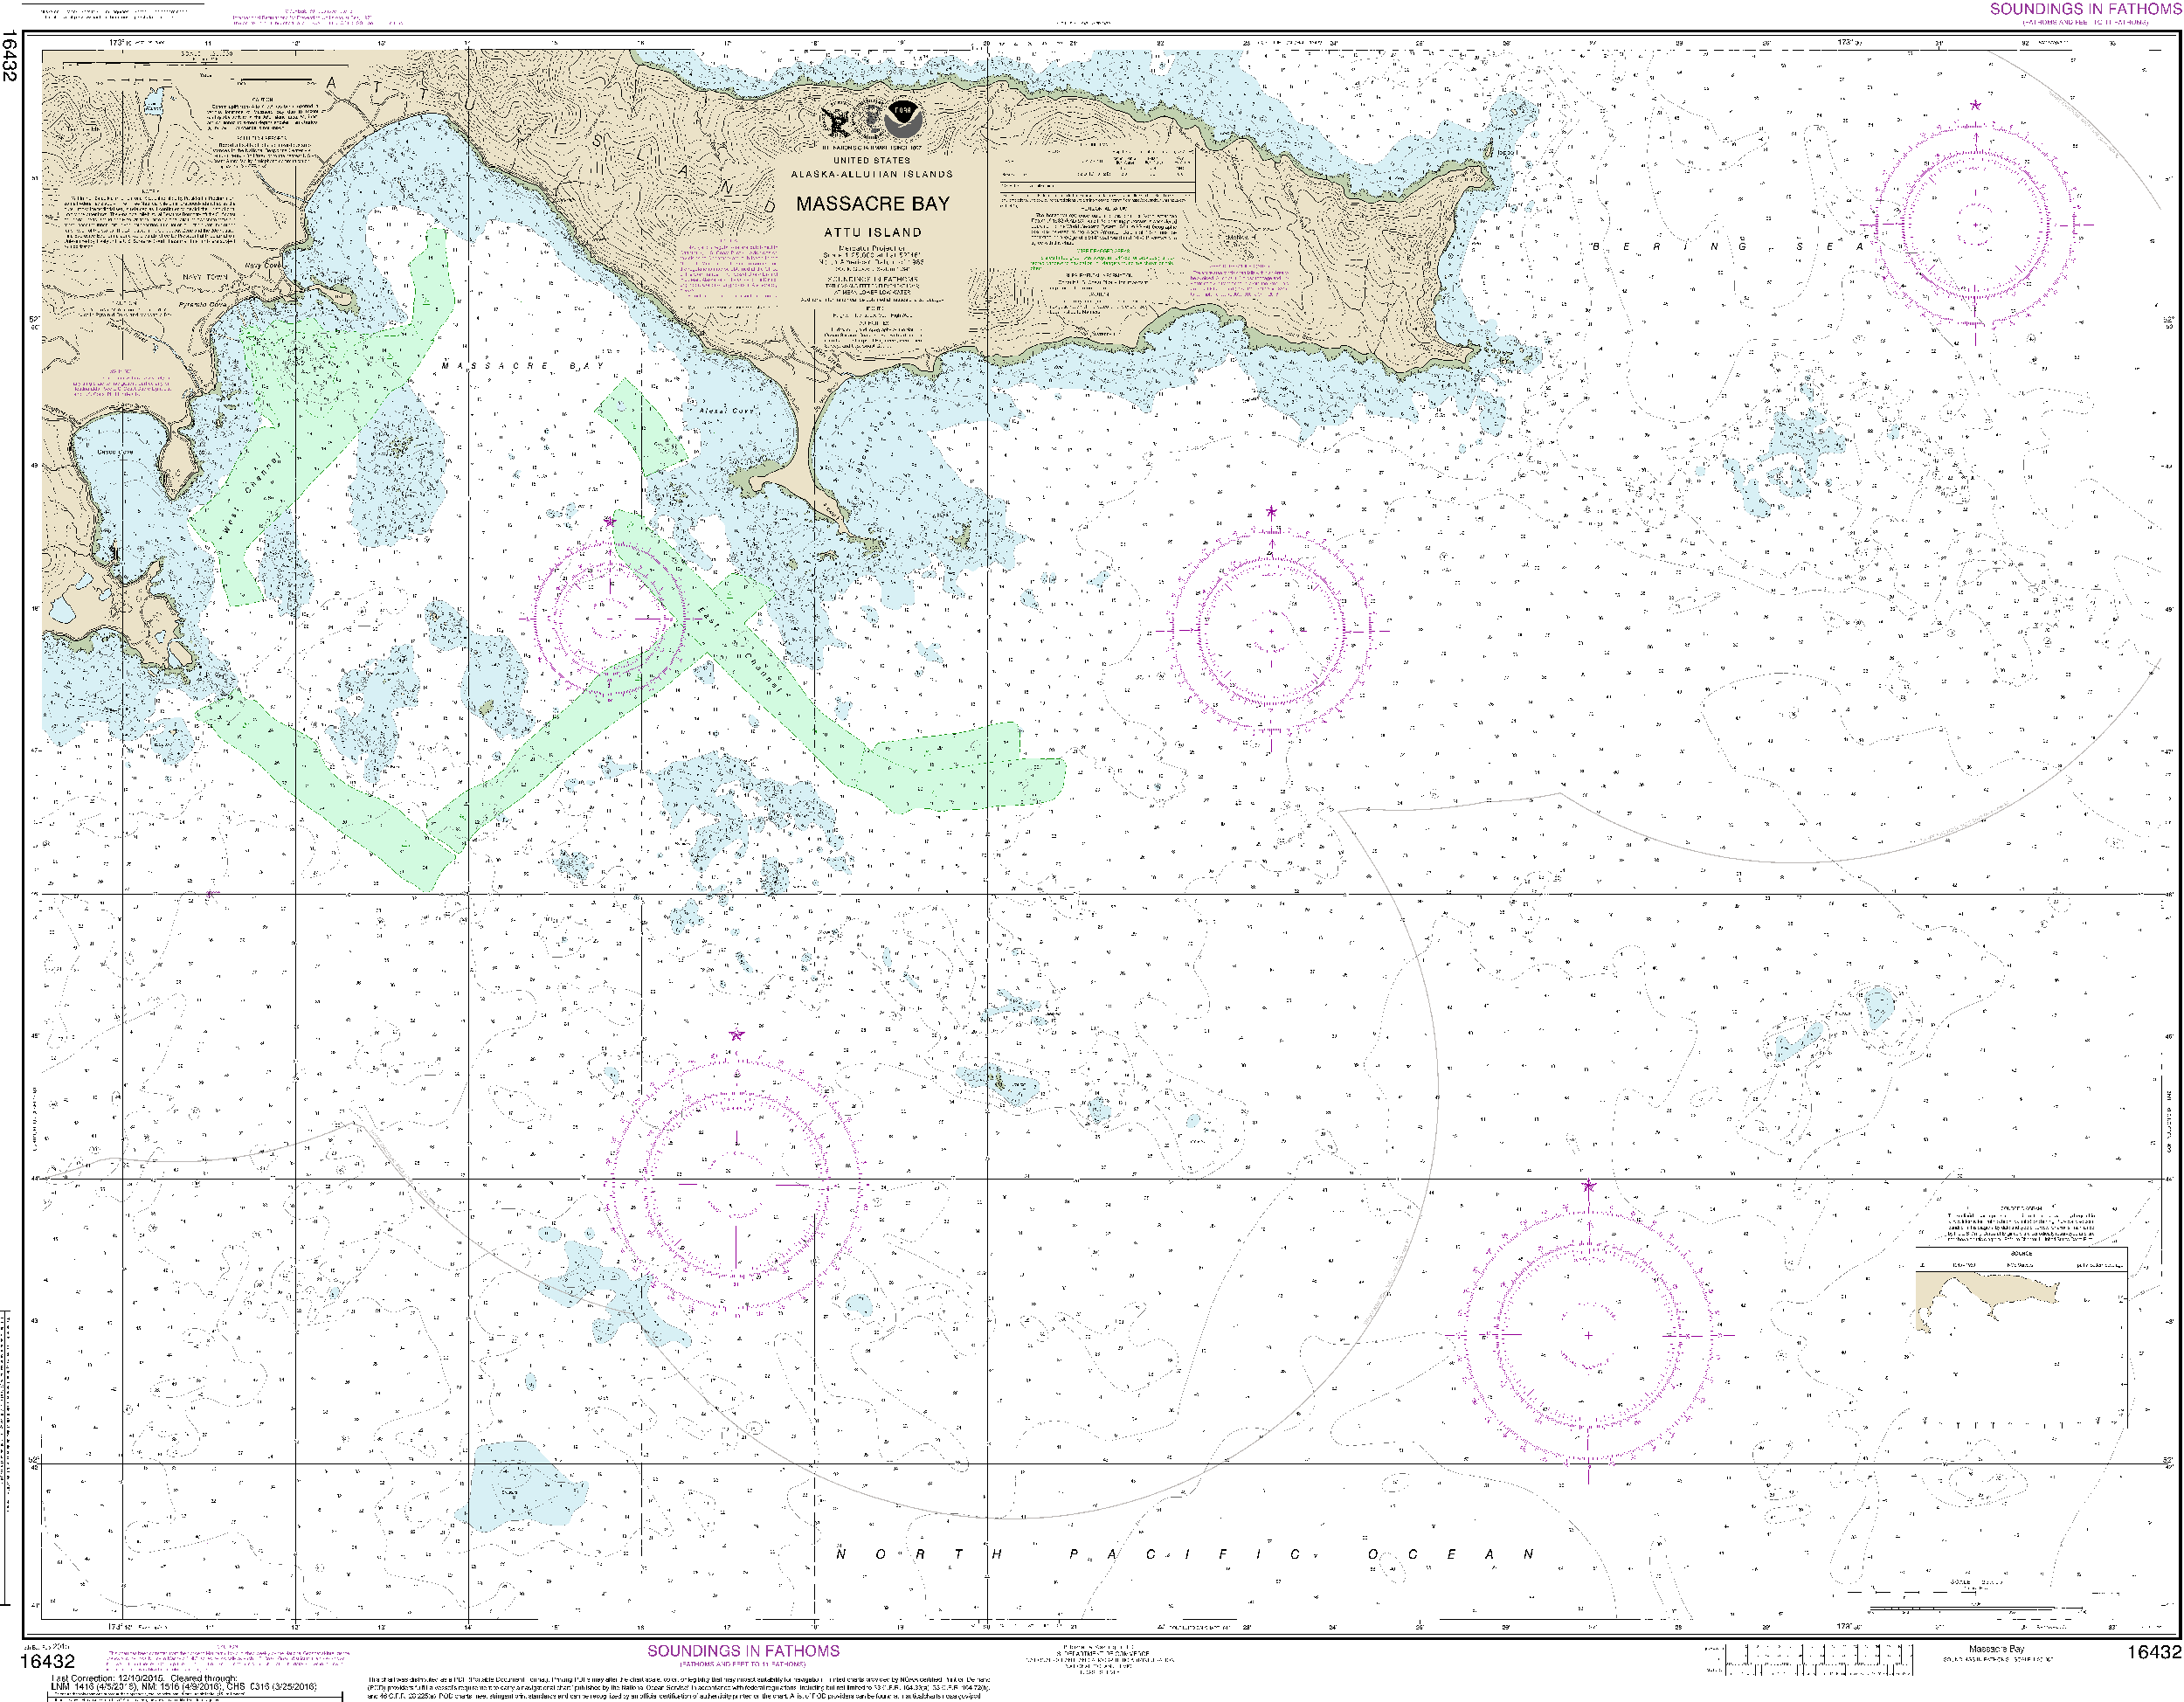 NOAA Nautical Chart 16432: Massacre Bay